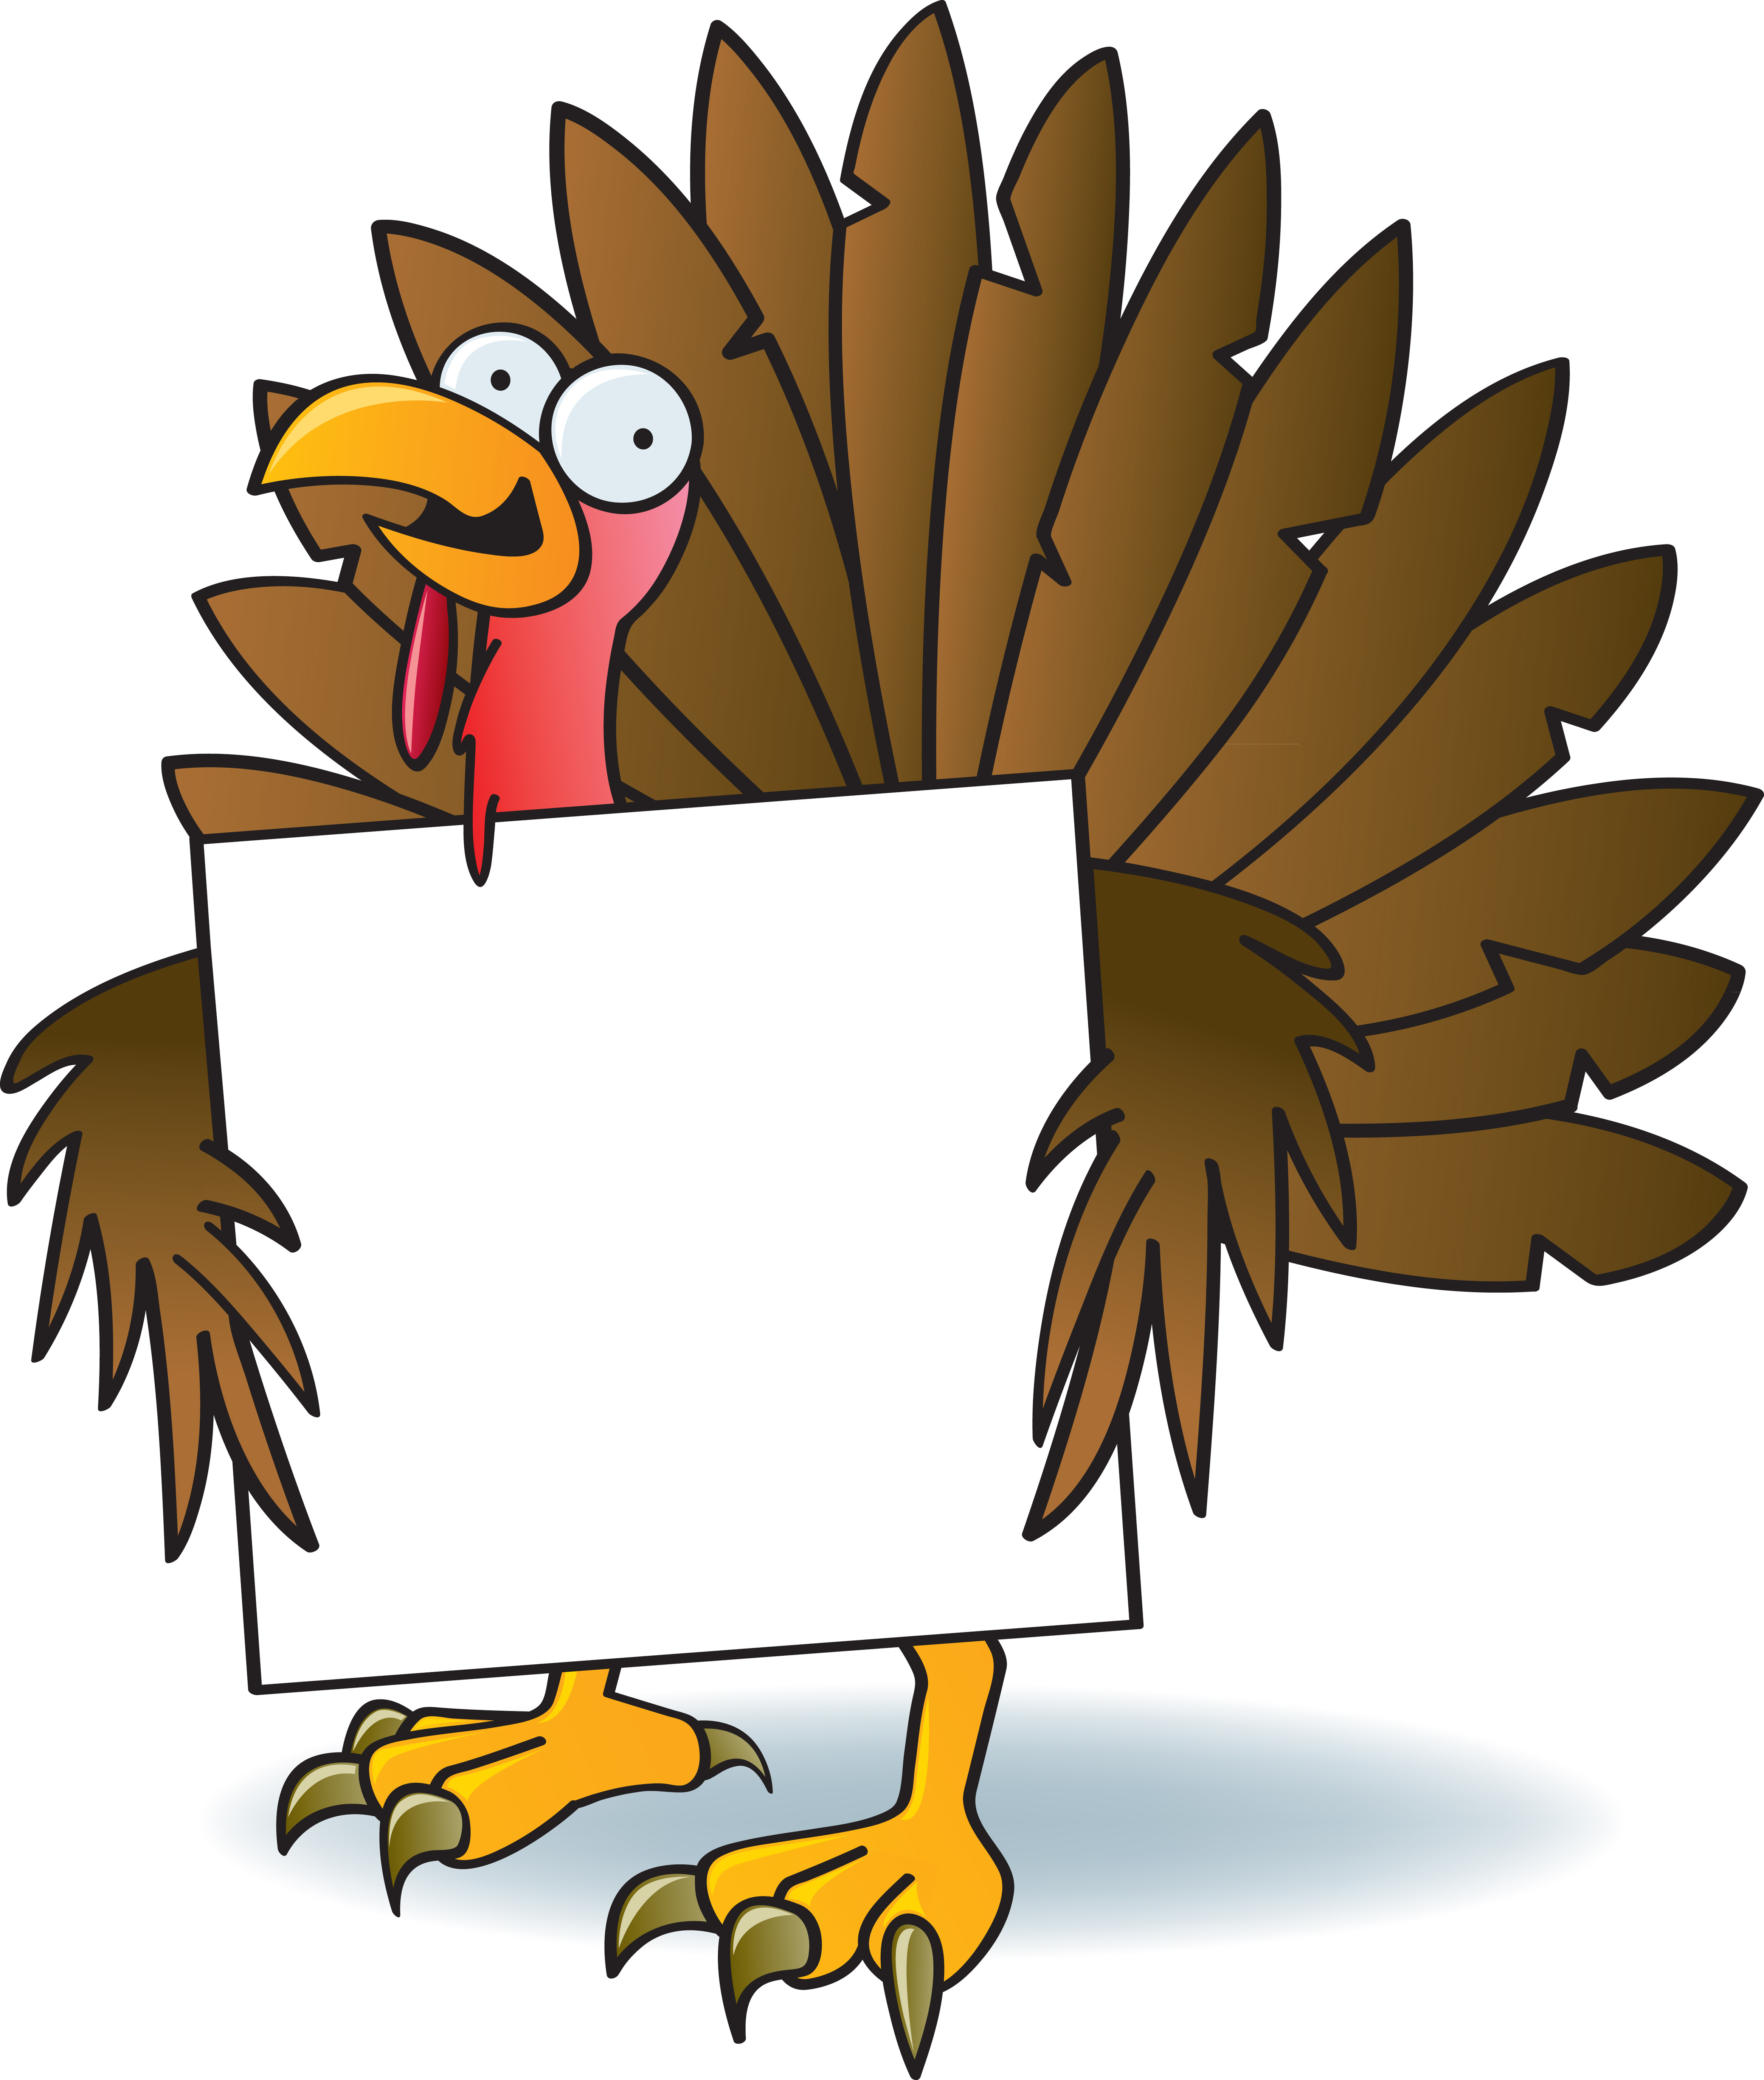 Thanksgiving Turkey Cartoon Images
 Illustration Vector by Jamie Slavy at Coroflot